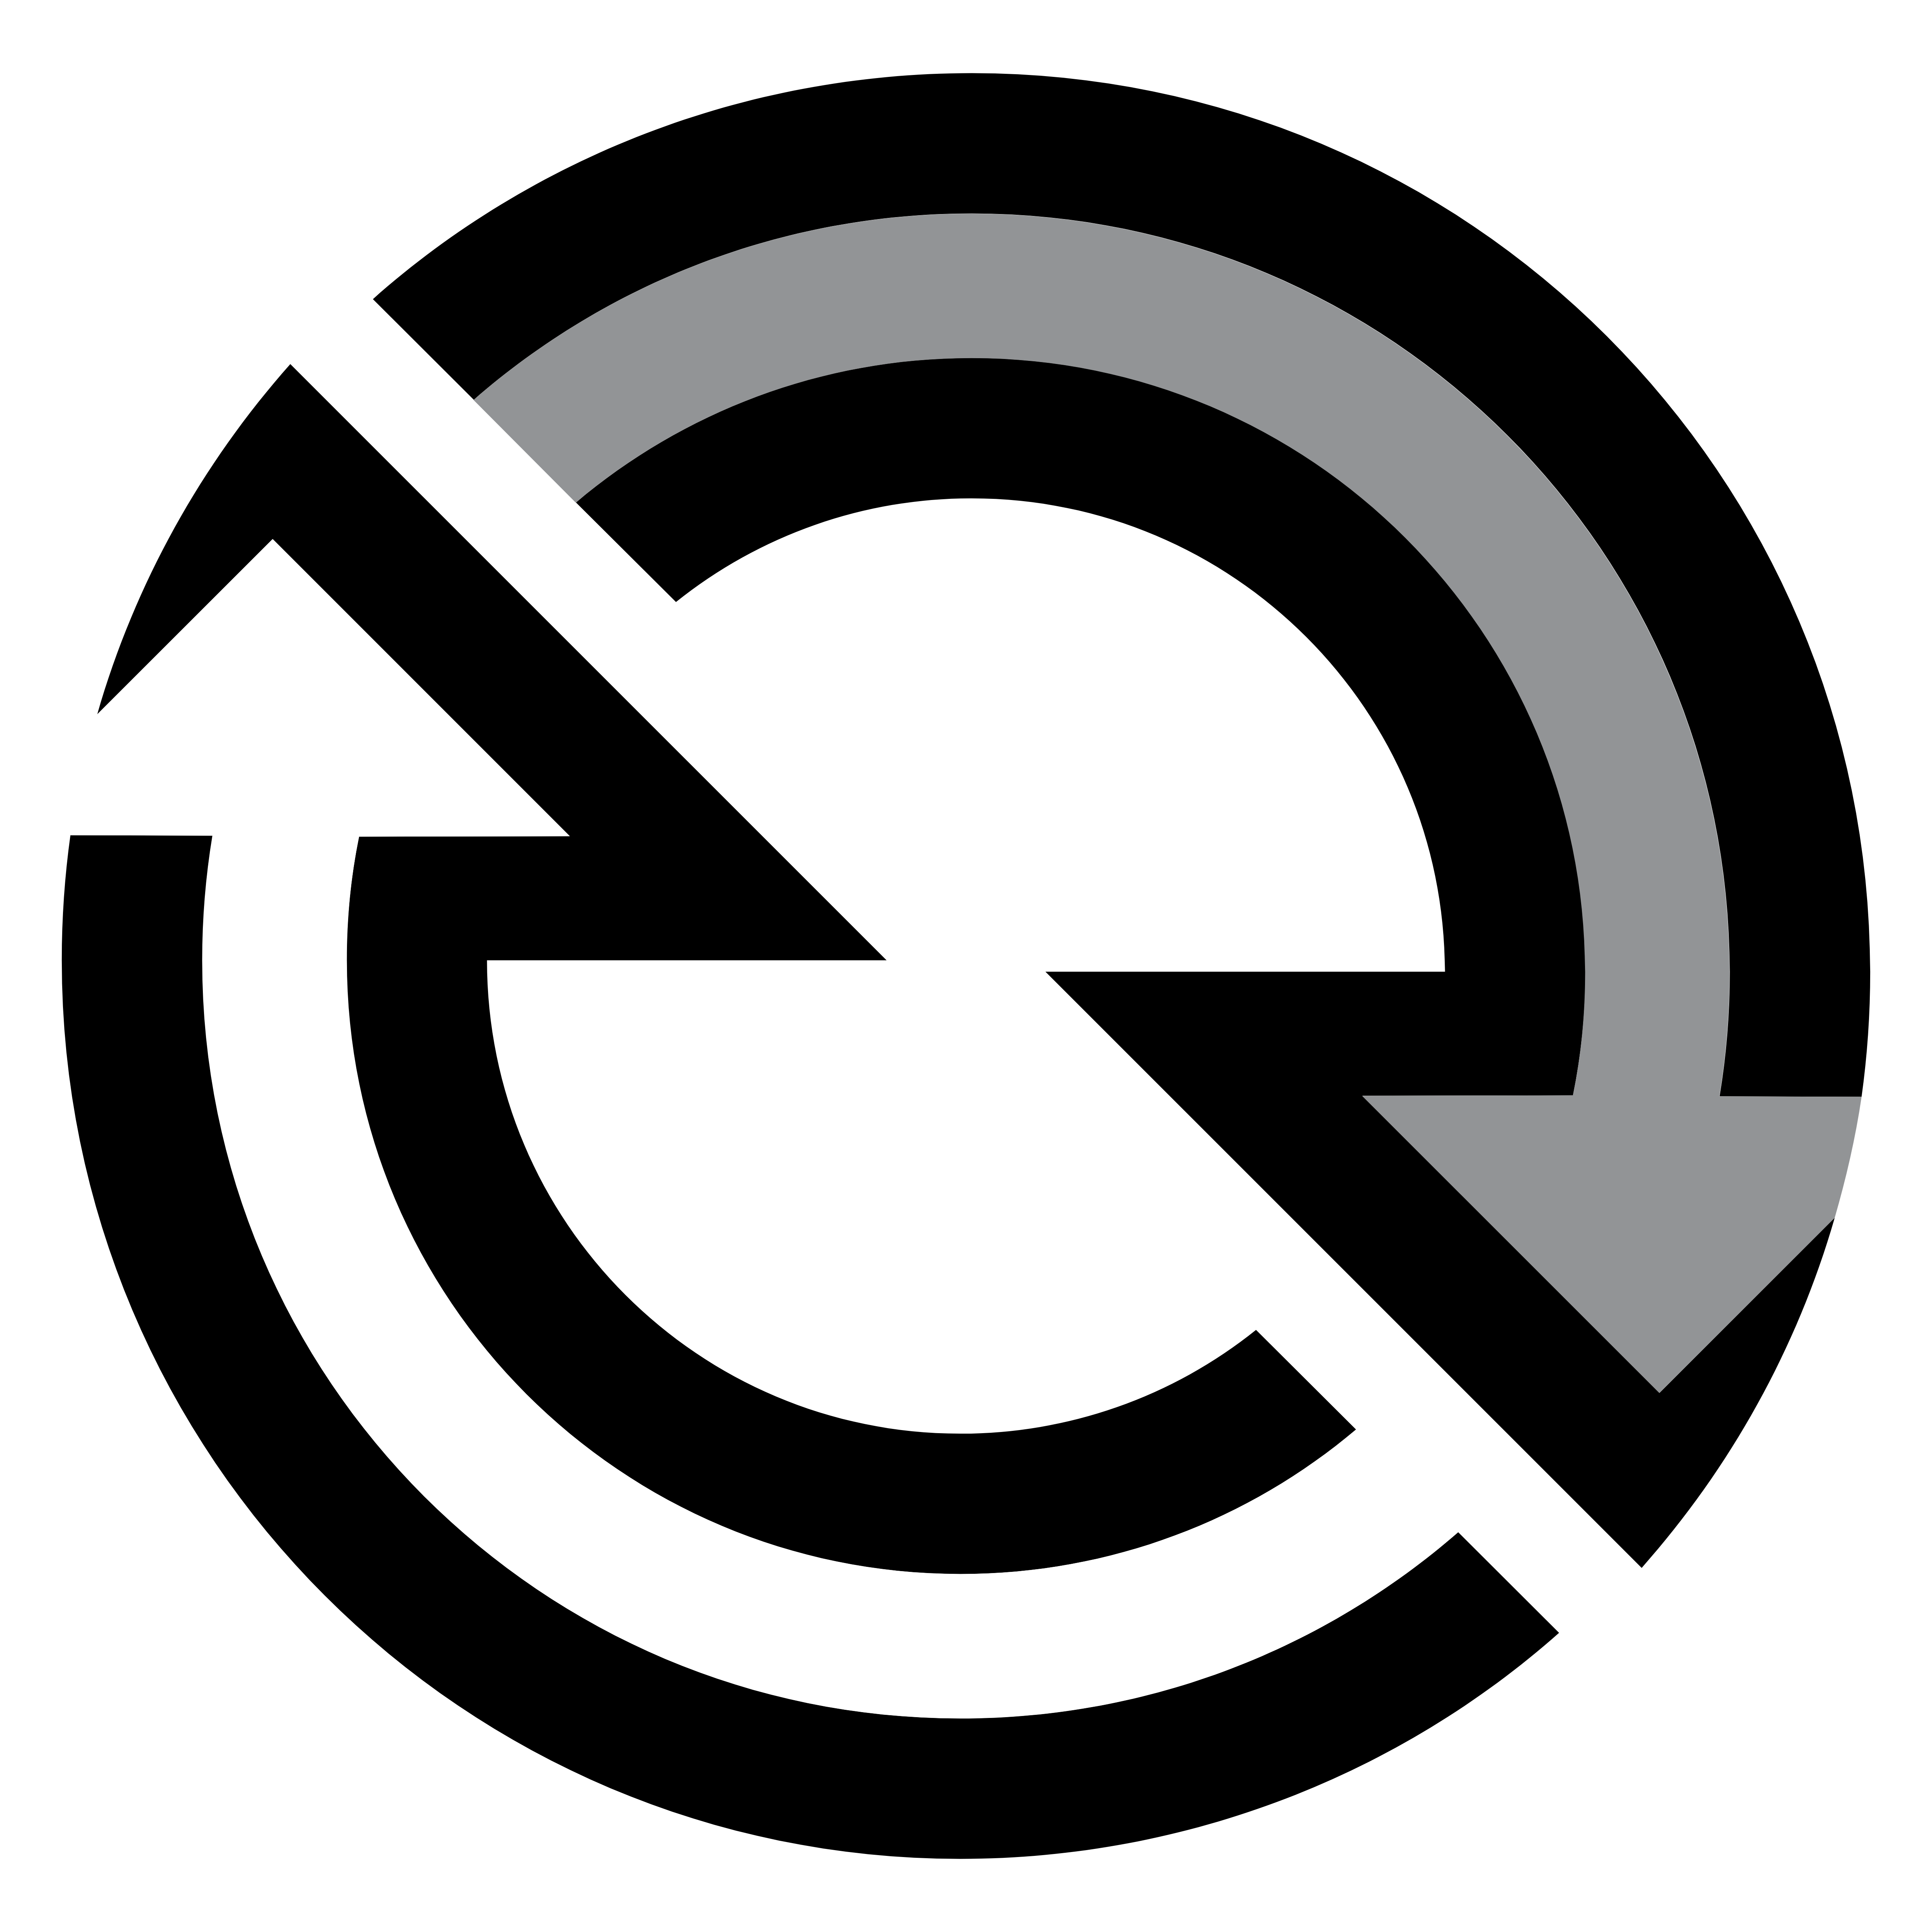 detroit diesel logo free download